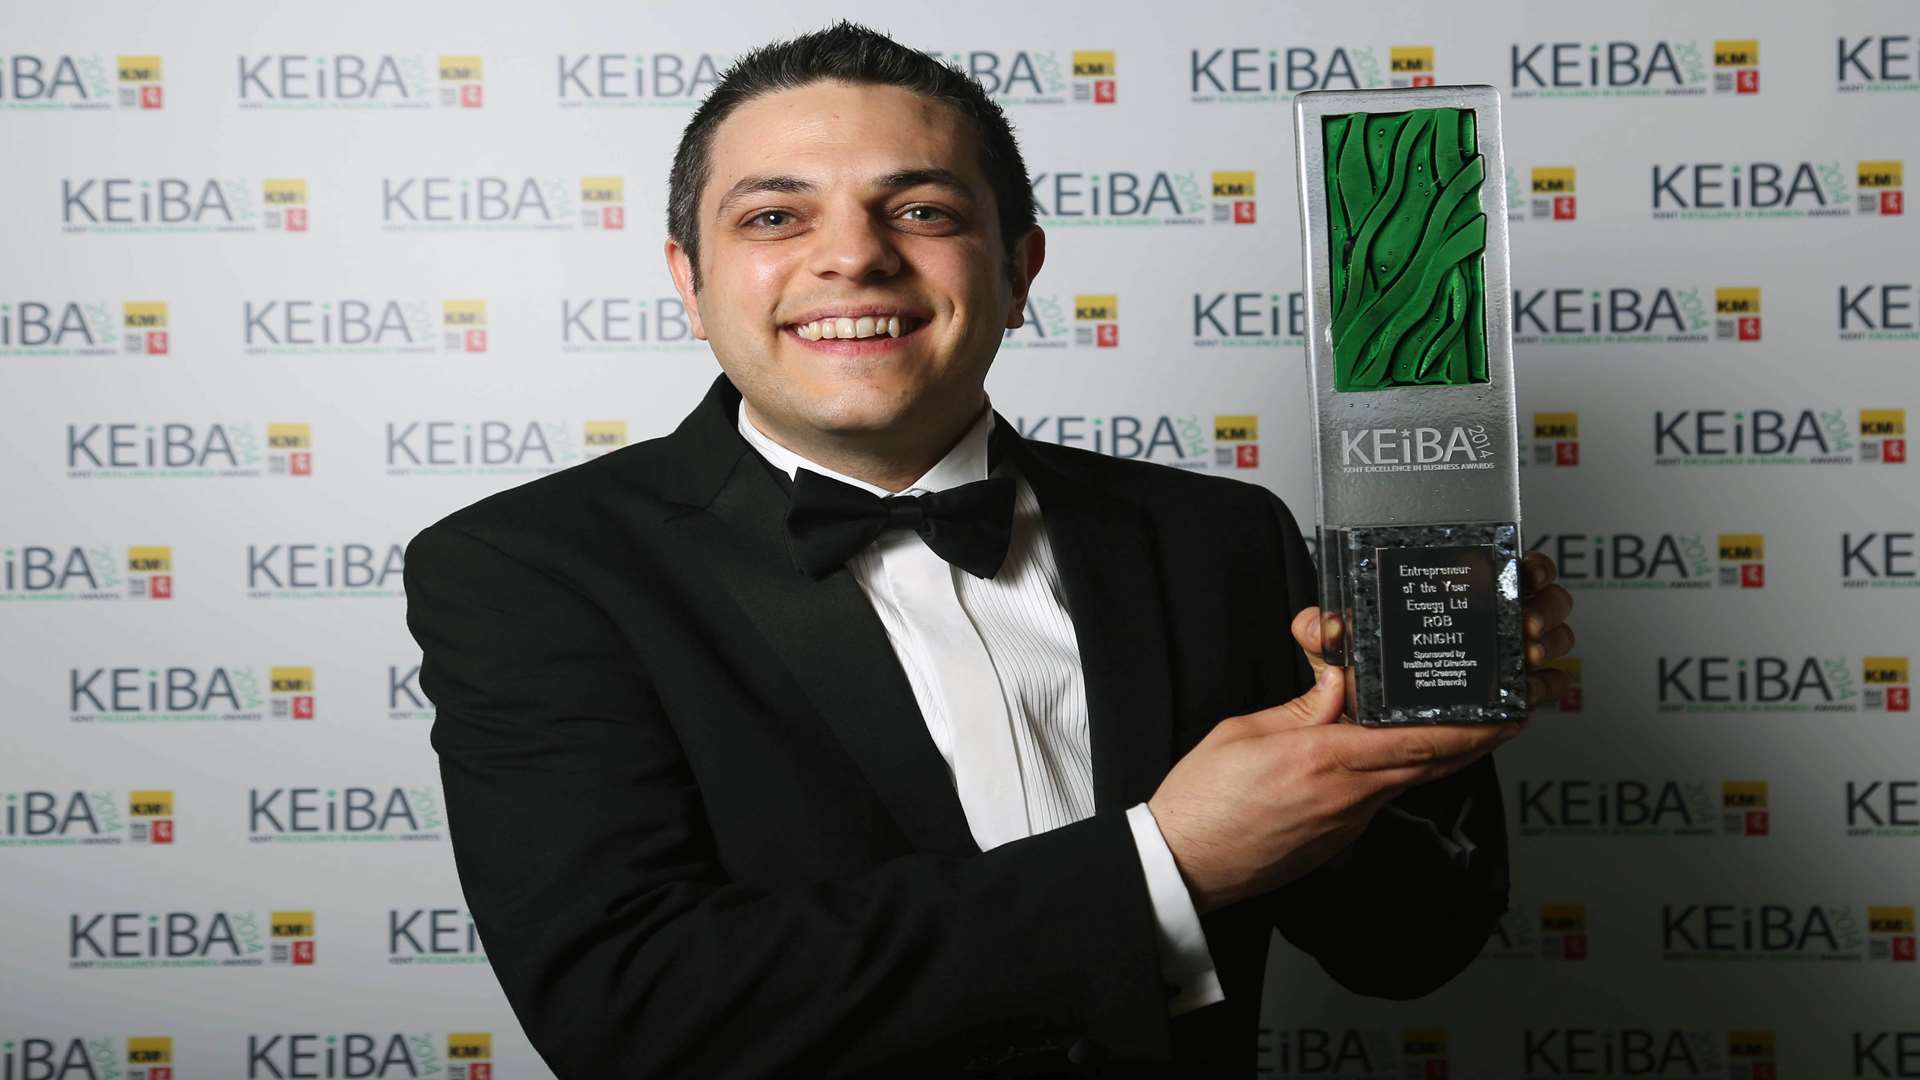 Rob Knight wins Entrepreneur of the Year for Ecoegg at KEiBA 2014